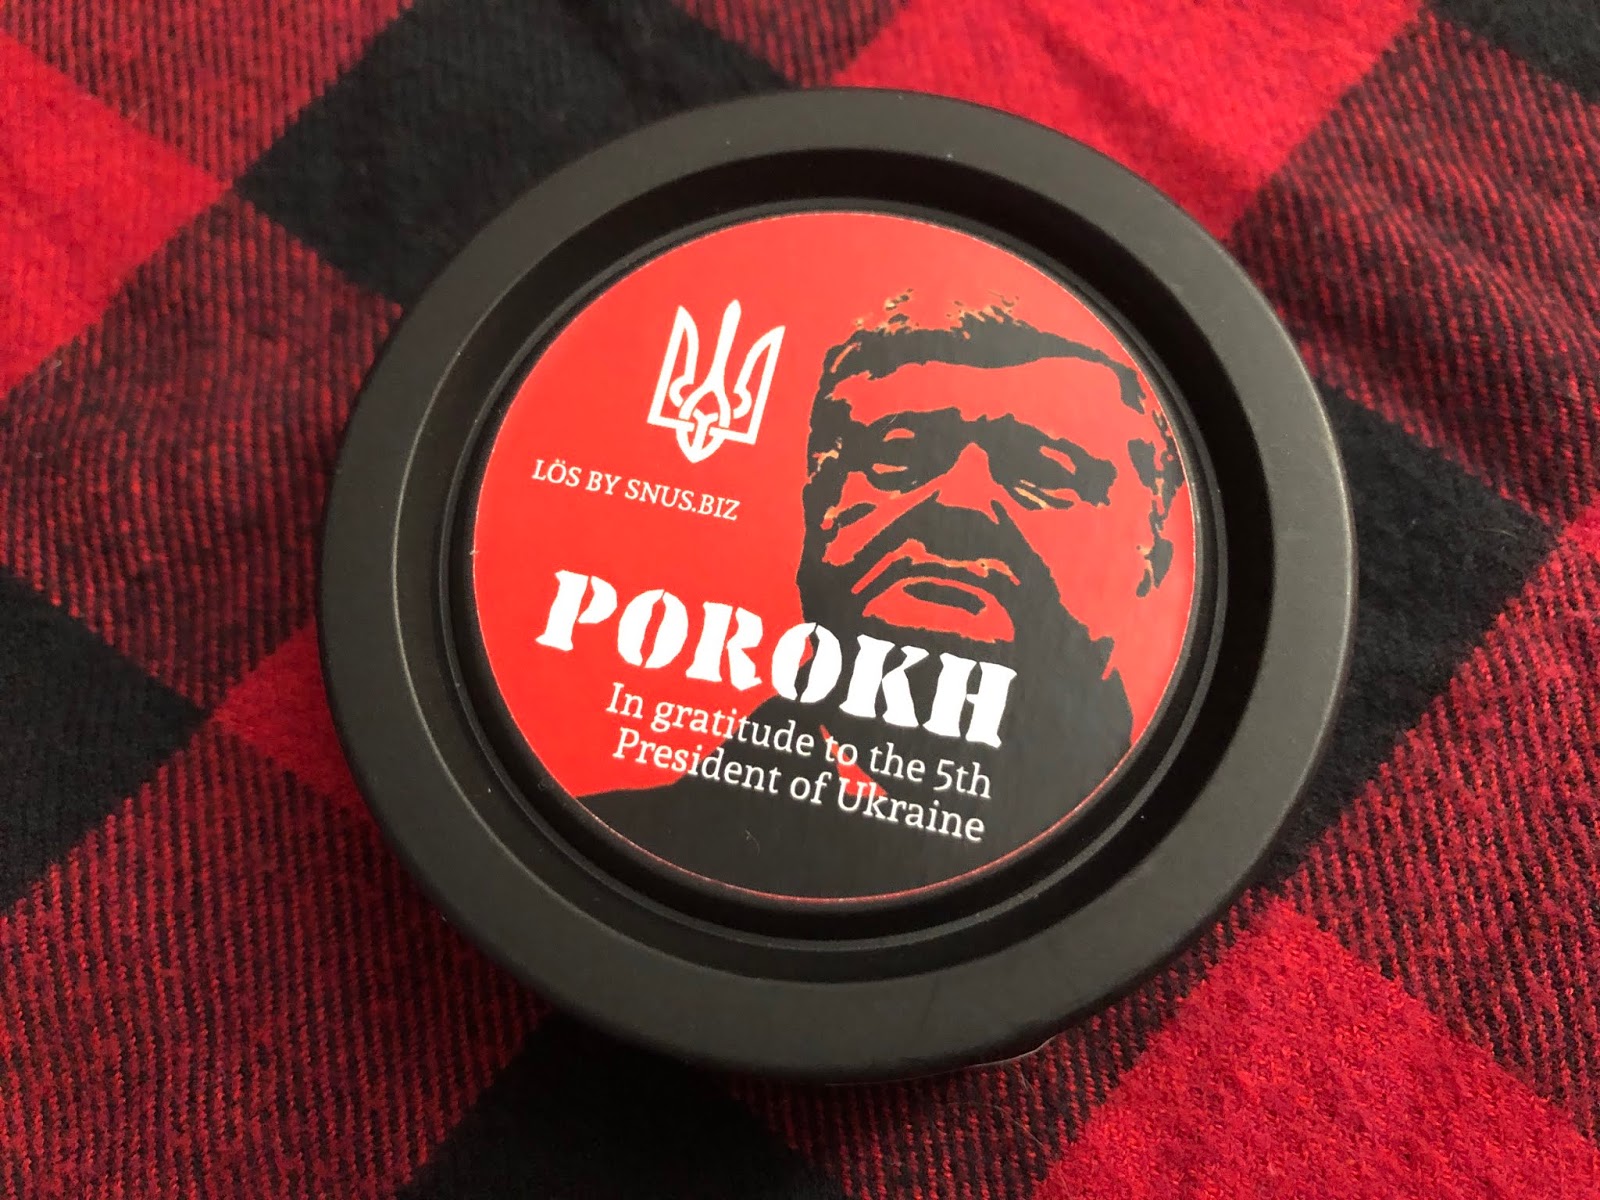 Snus.biz: Porokh (Lös) - Review. 